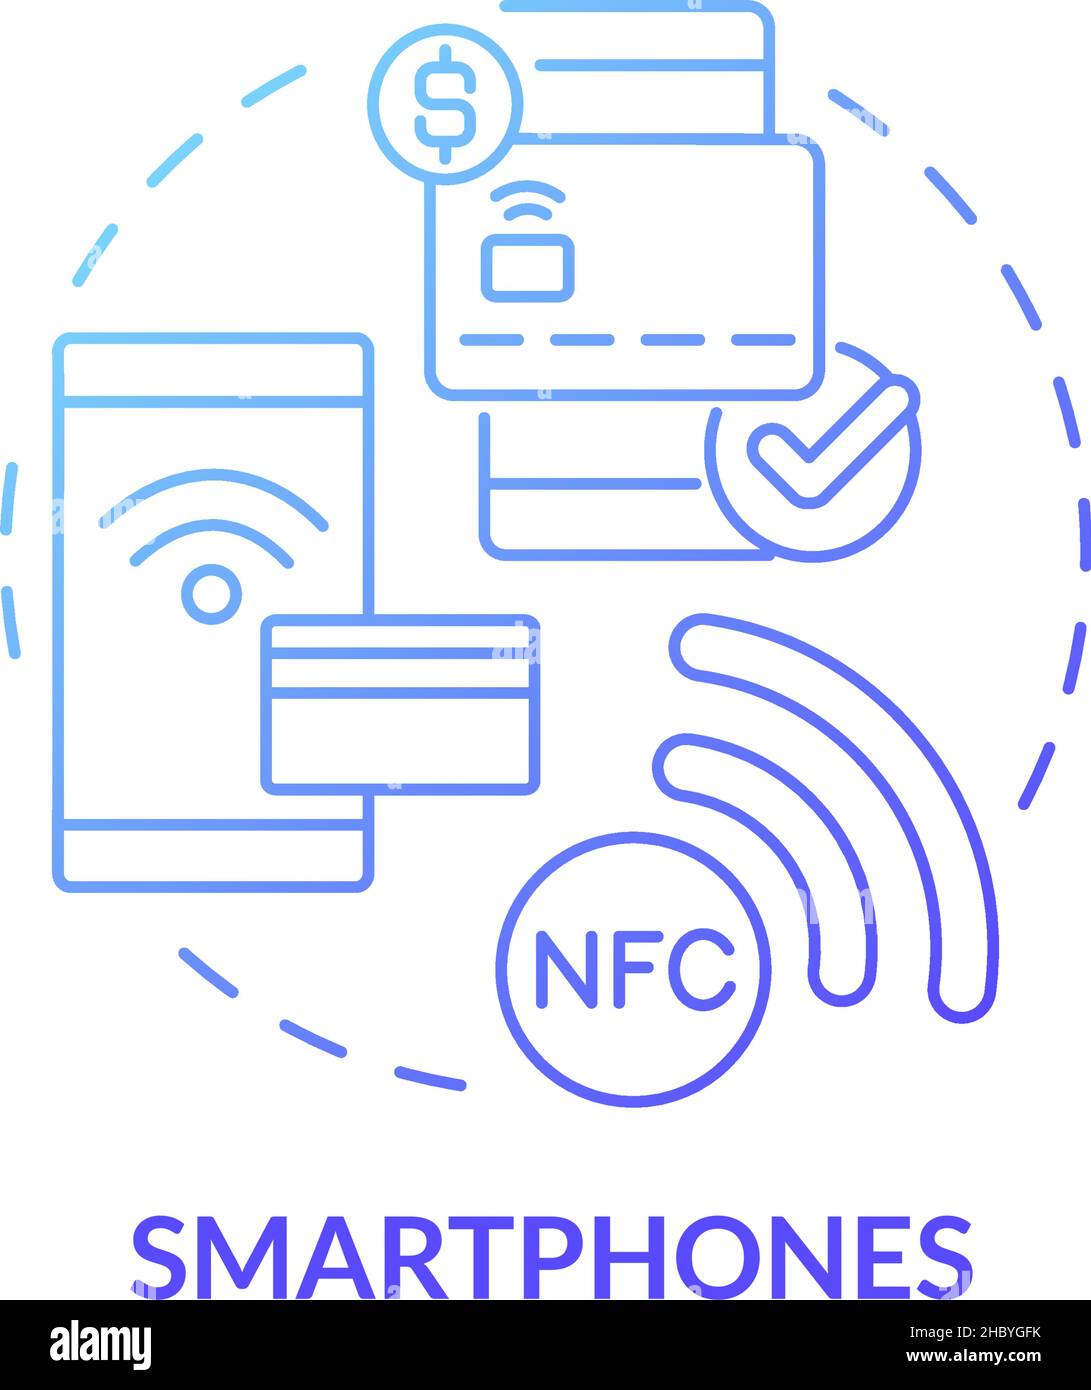 Smartphones blue gradient concept icon Stock Vector